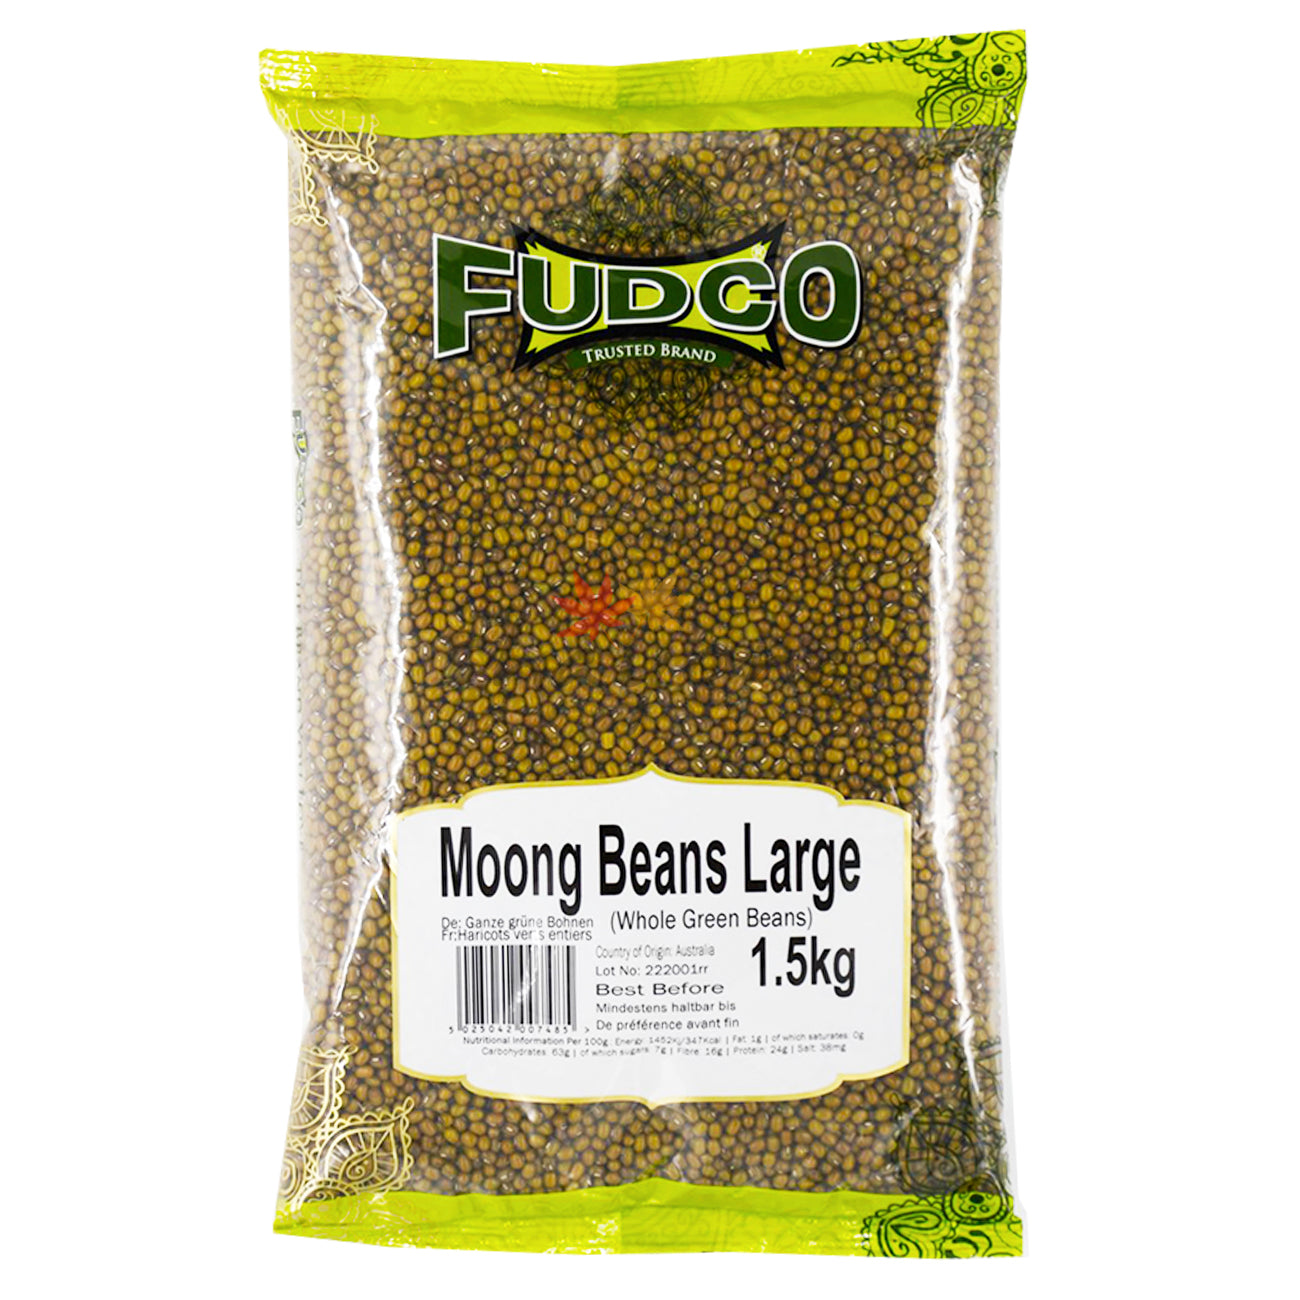 Fudco Moong Beans Large